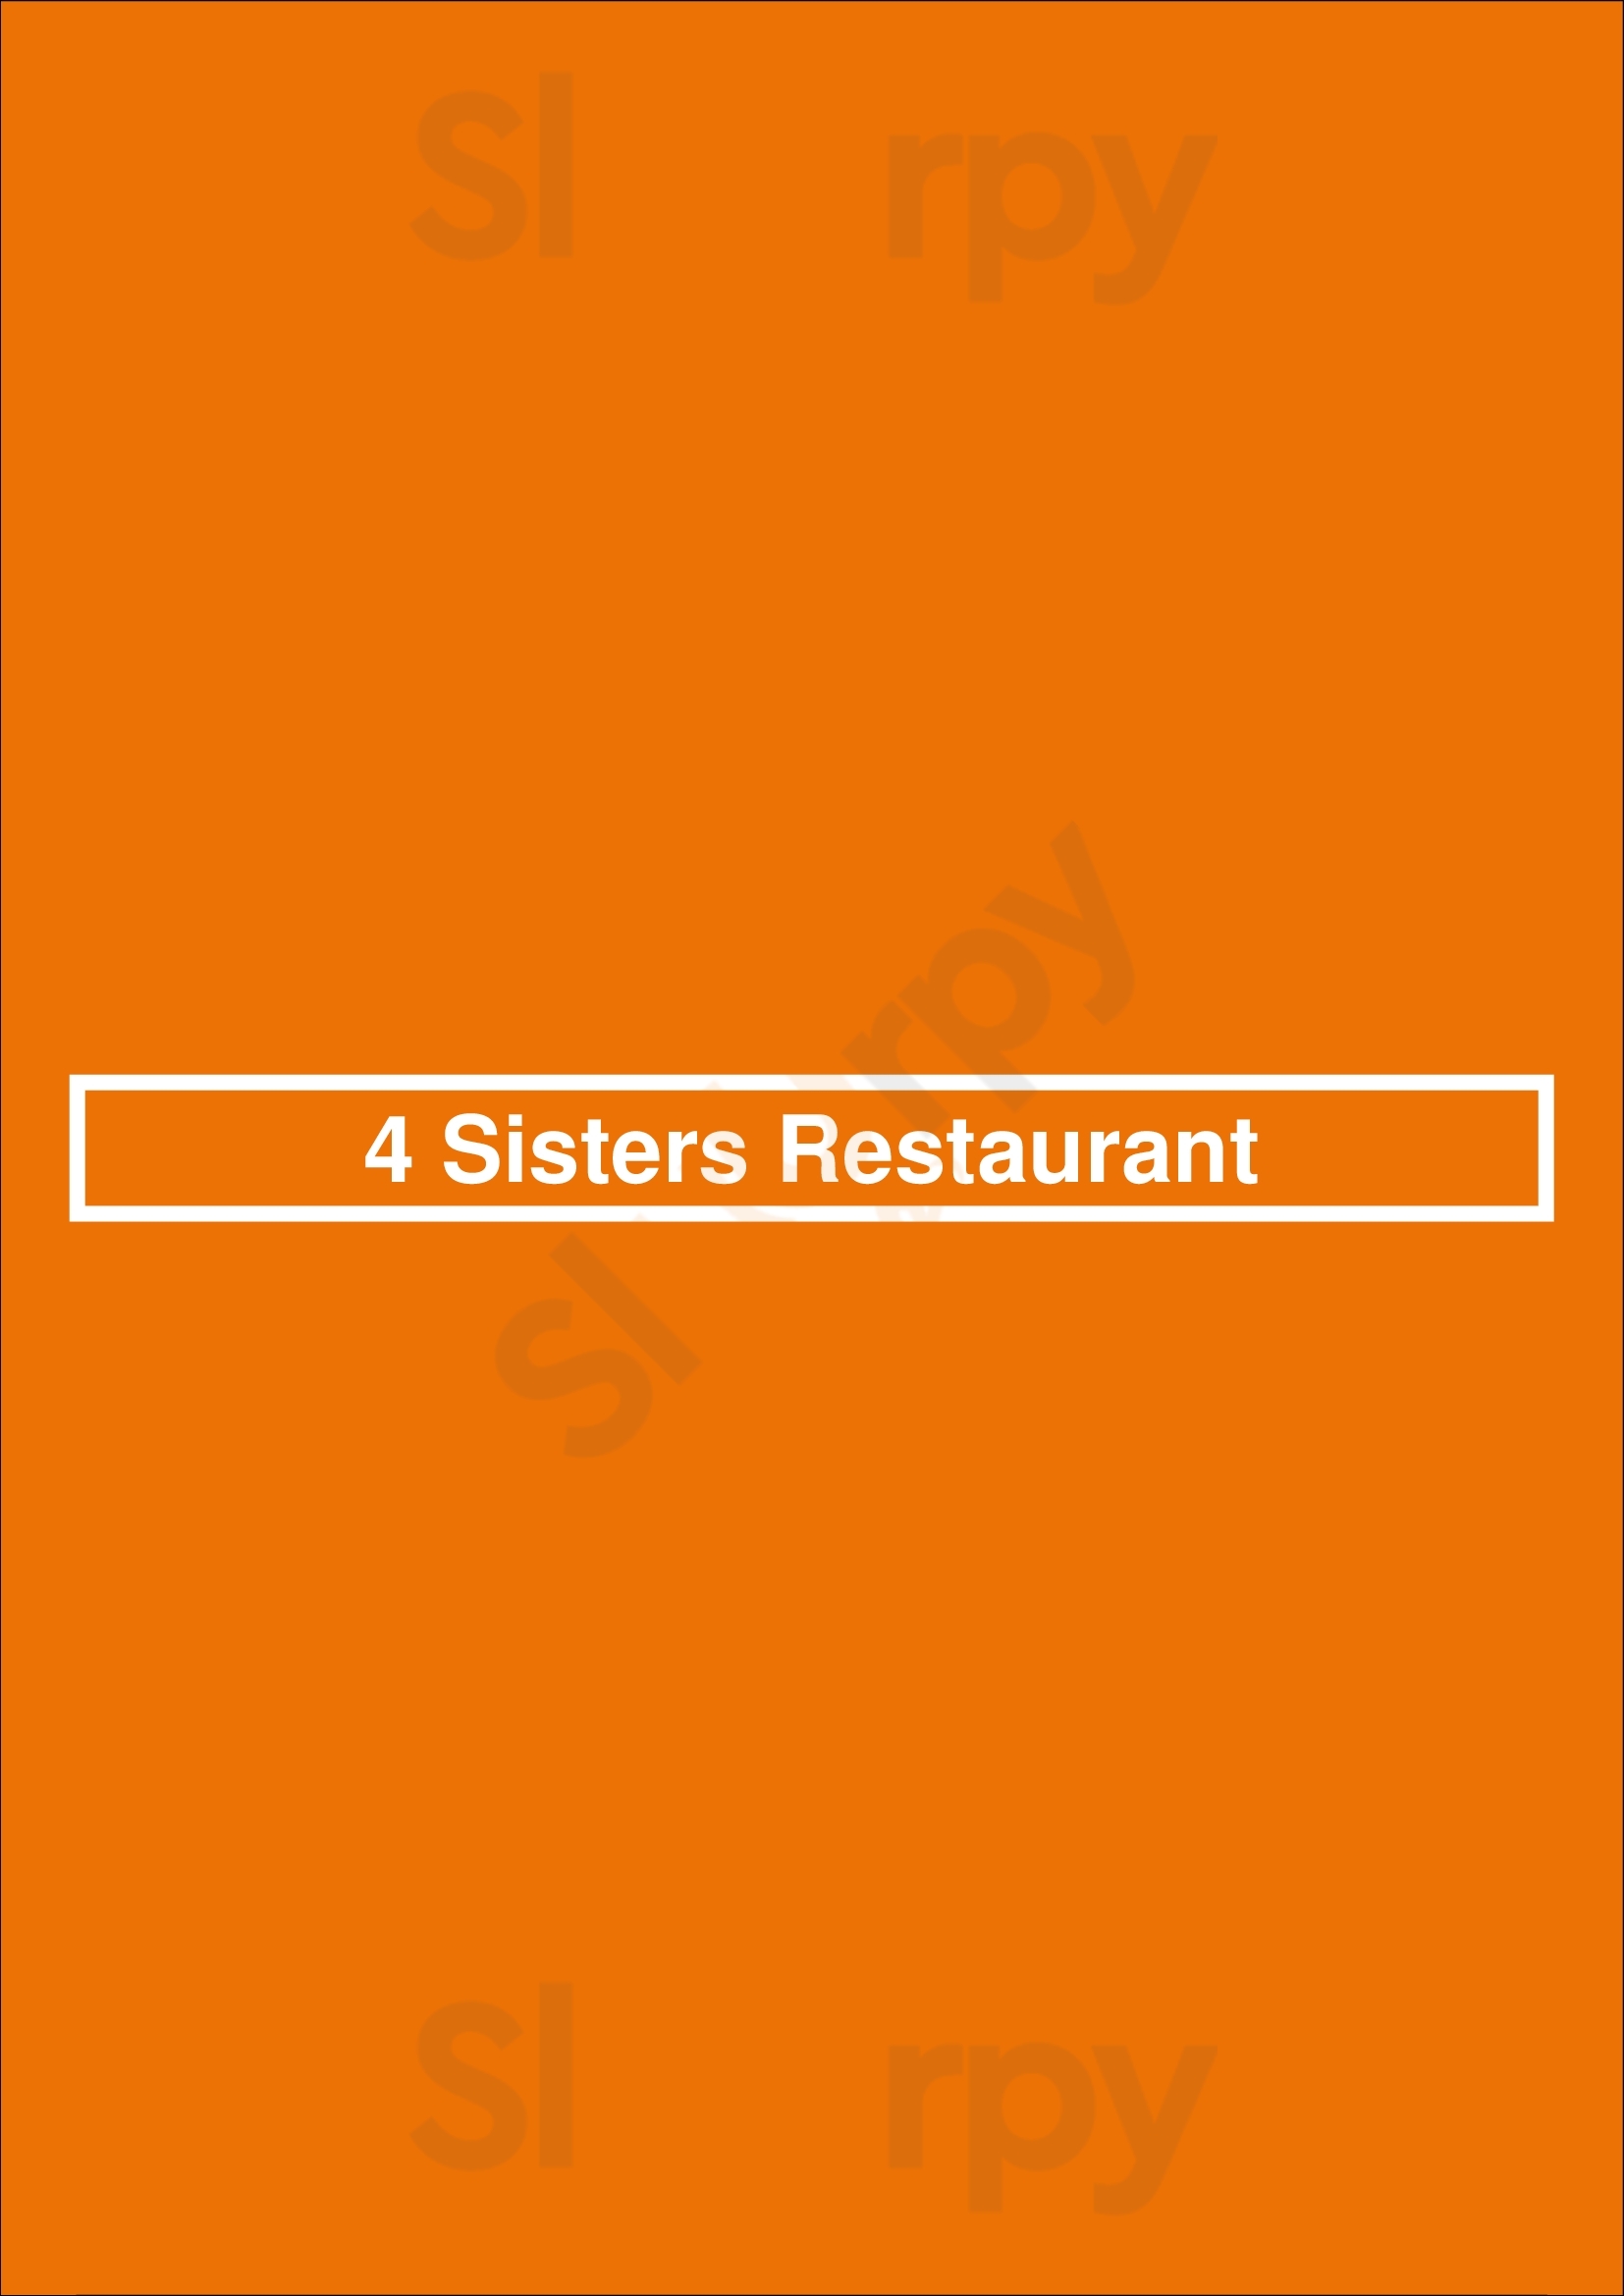 4 Sisters Restaurant Winnipeg Menu - 1